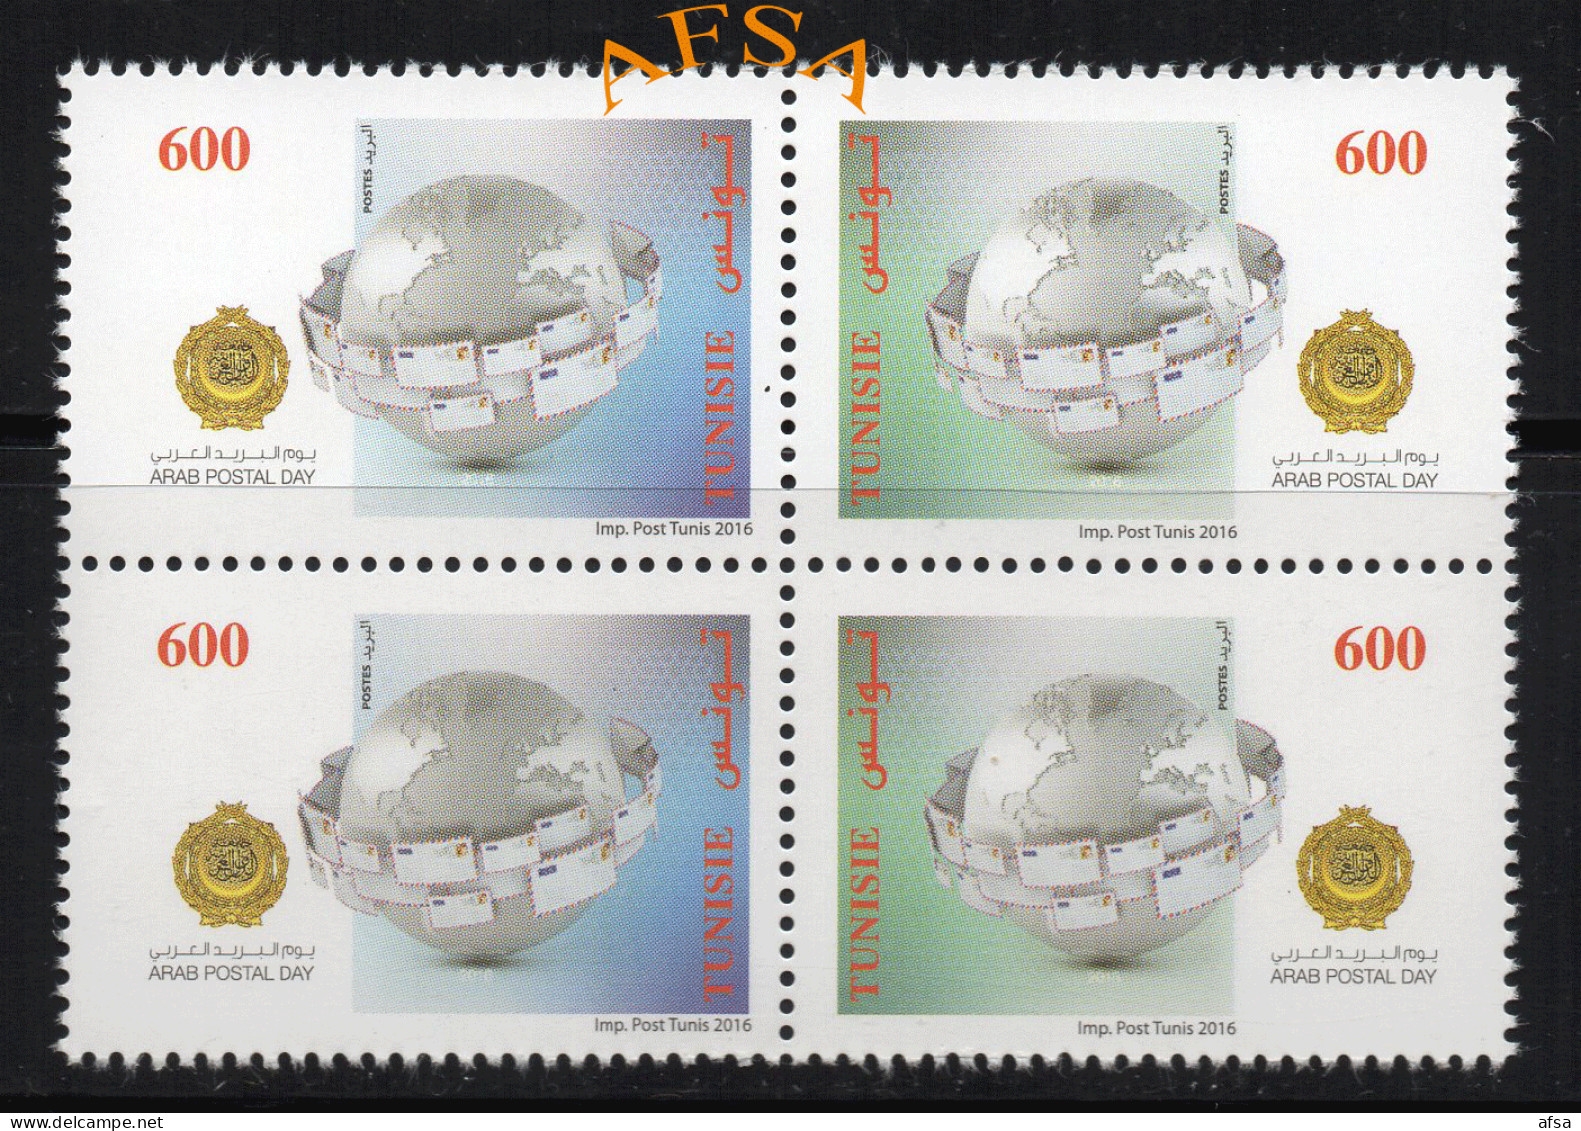 Tunisia 2016-Arab Postal Day-(Block Of 4) Joint Issue With Egypt,Jordan,Bahrain,UAE.Lebanon,irak - Ongebruikt